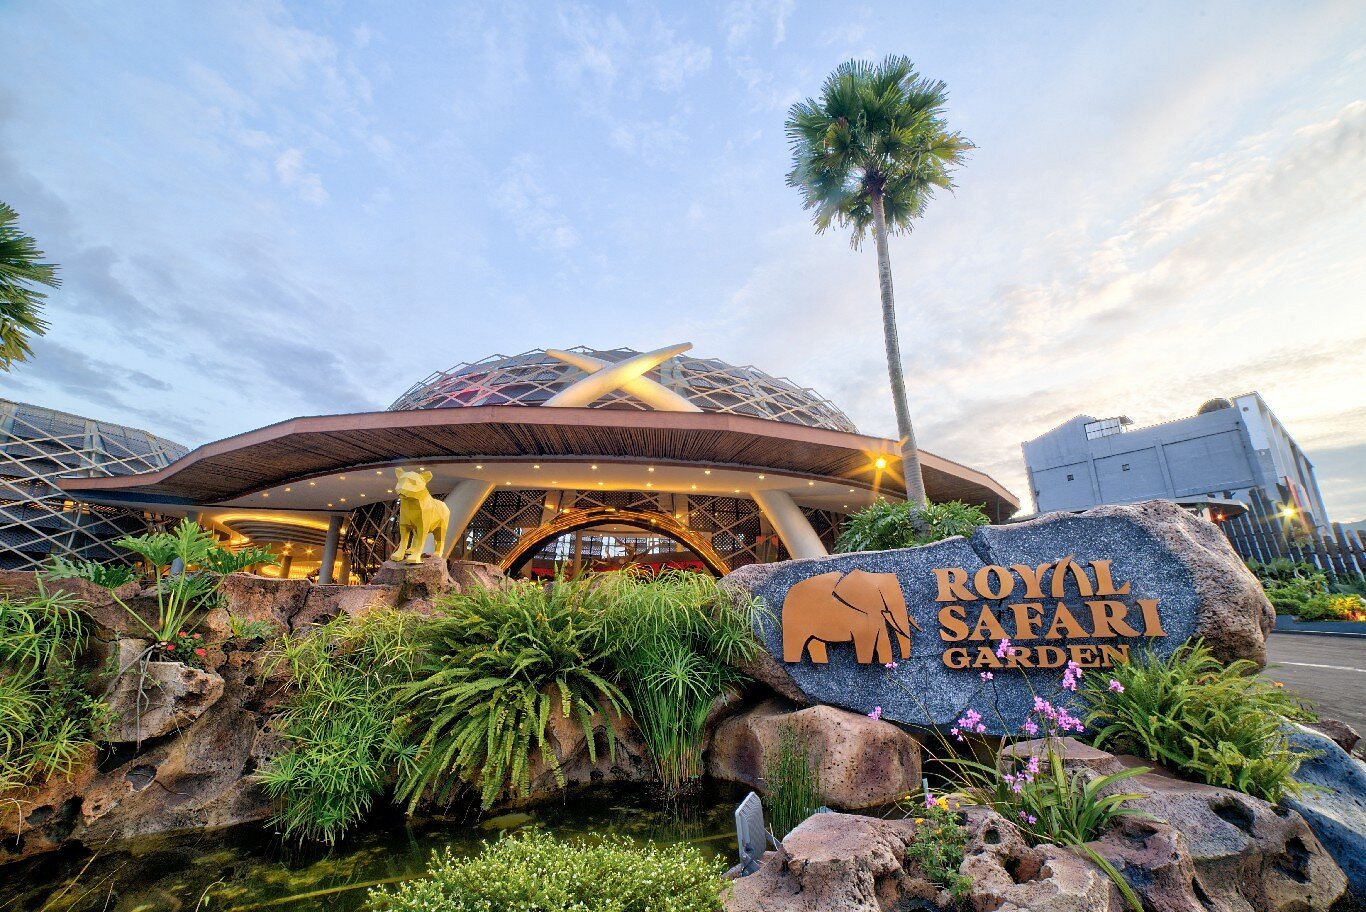 sky garden royal safari